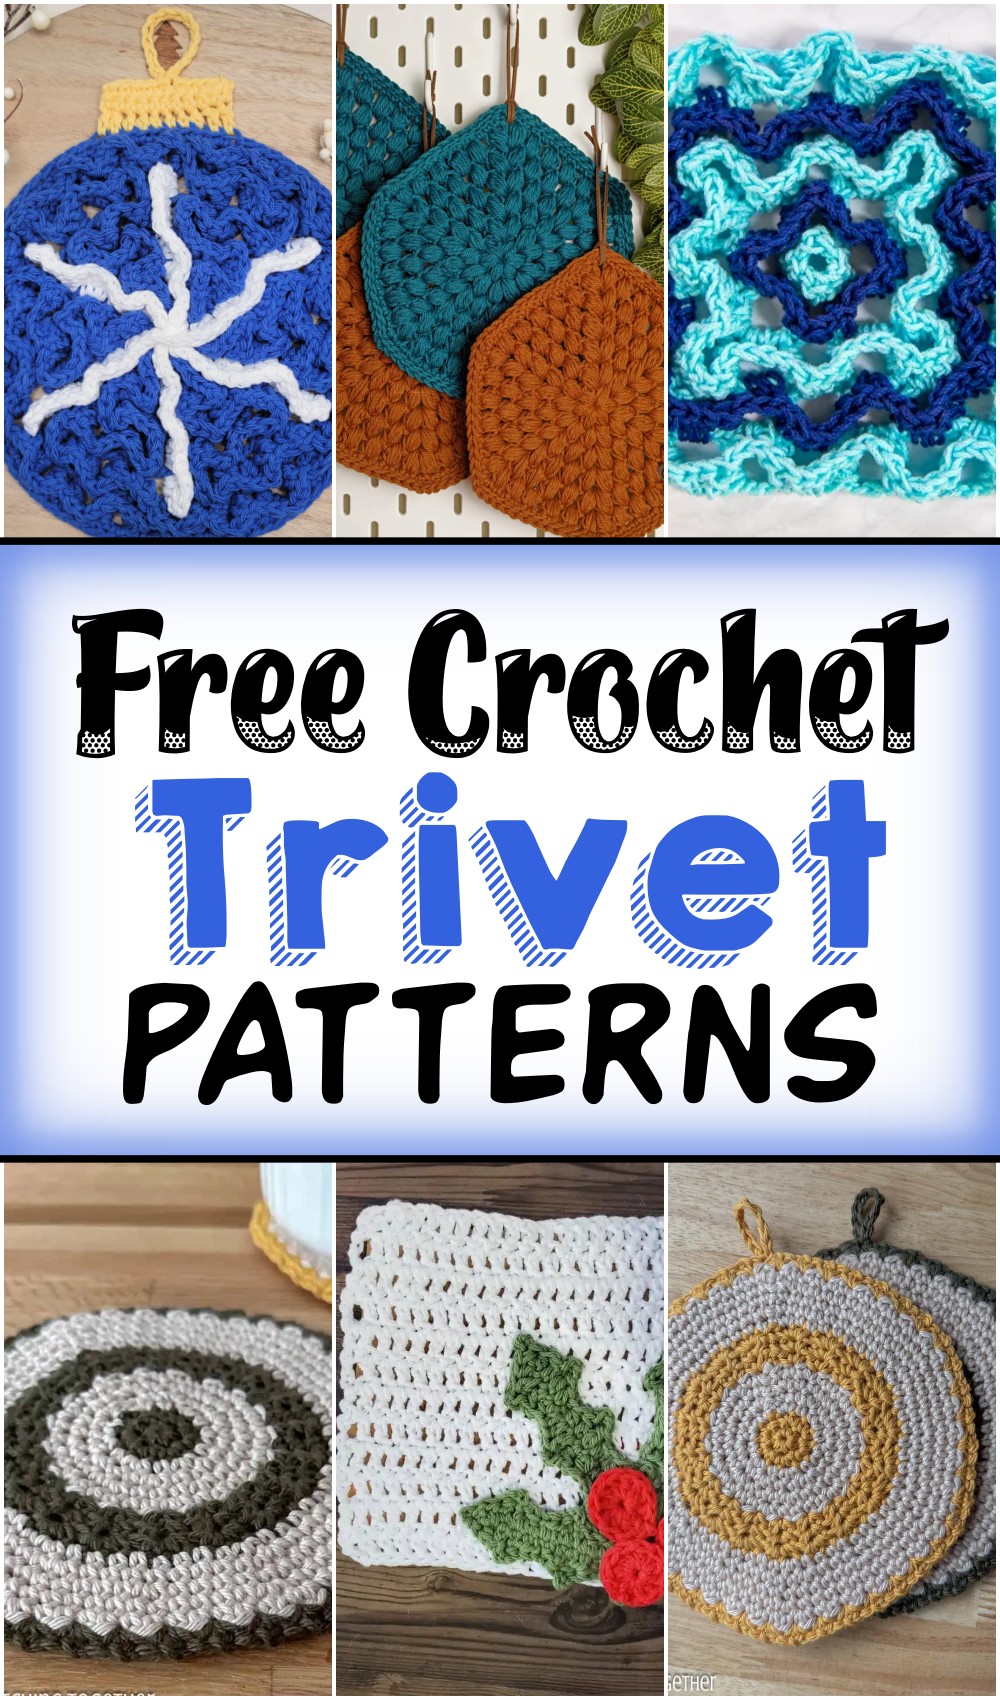 Free Crochet Trivet Patterns For Beginners & Experts 